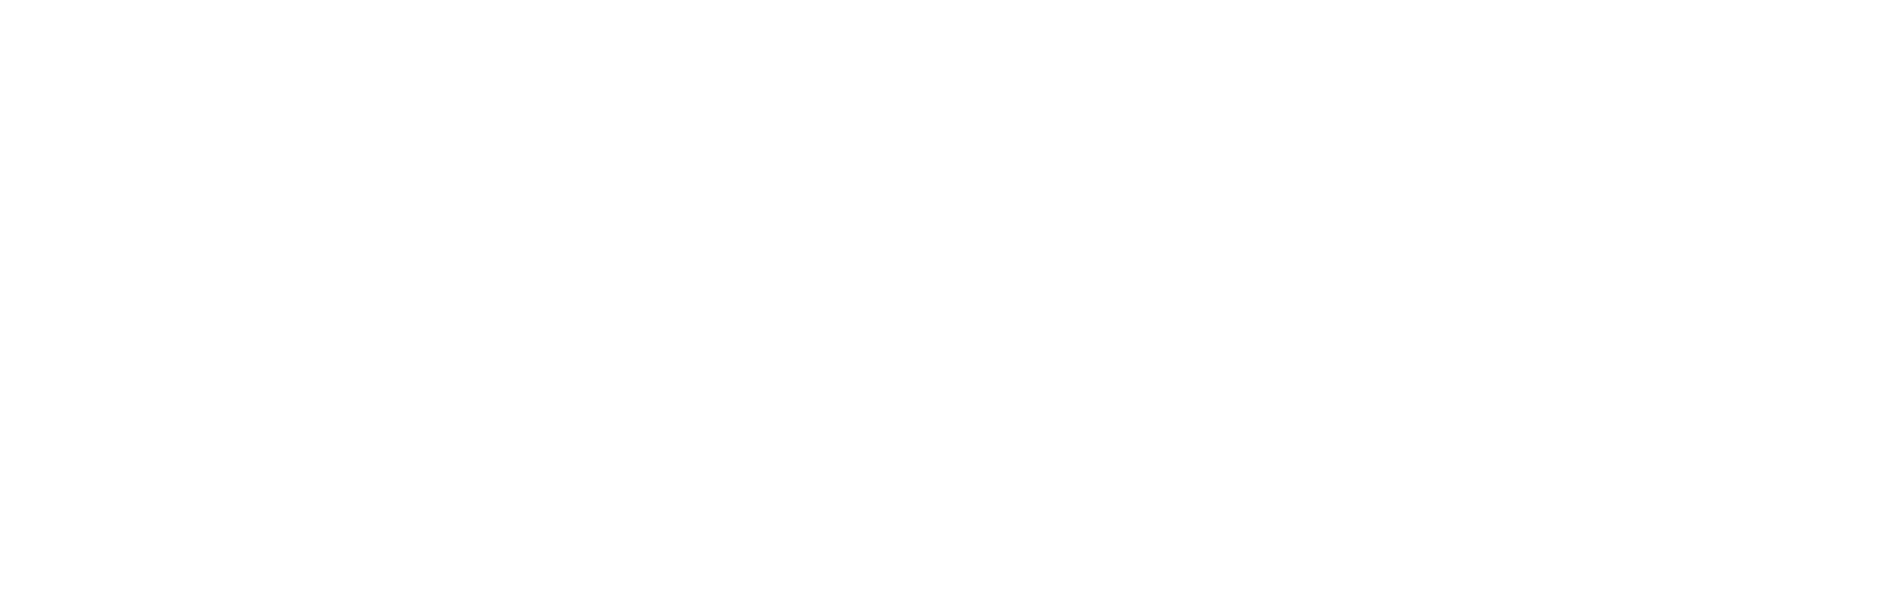 banner_ykk_ap_channel